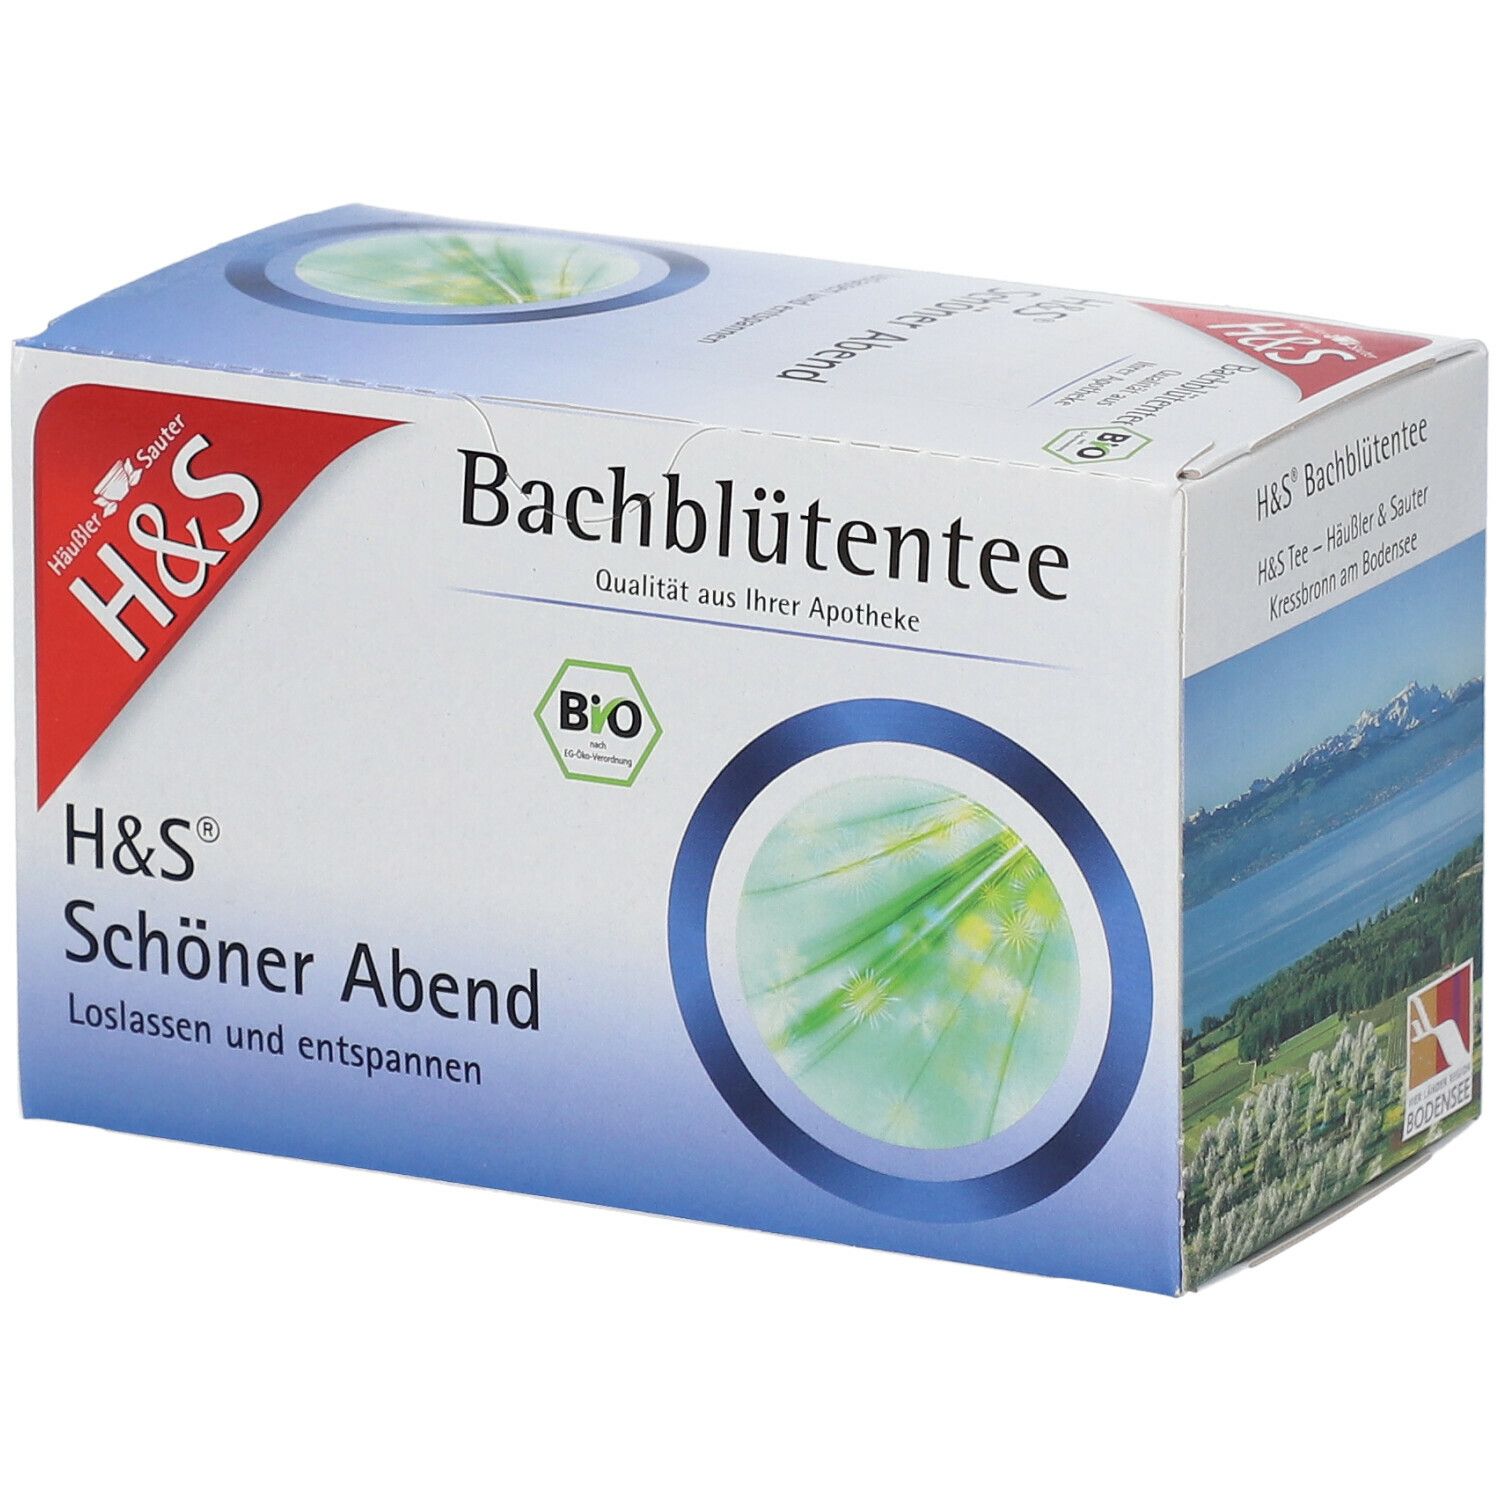 Image of H&S® Bachblütentee Schöner Abend Nr. 86